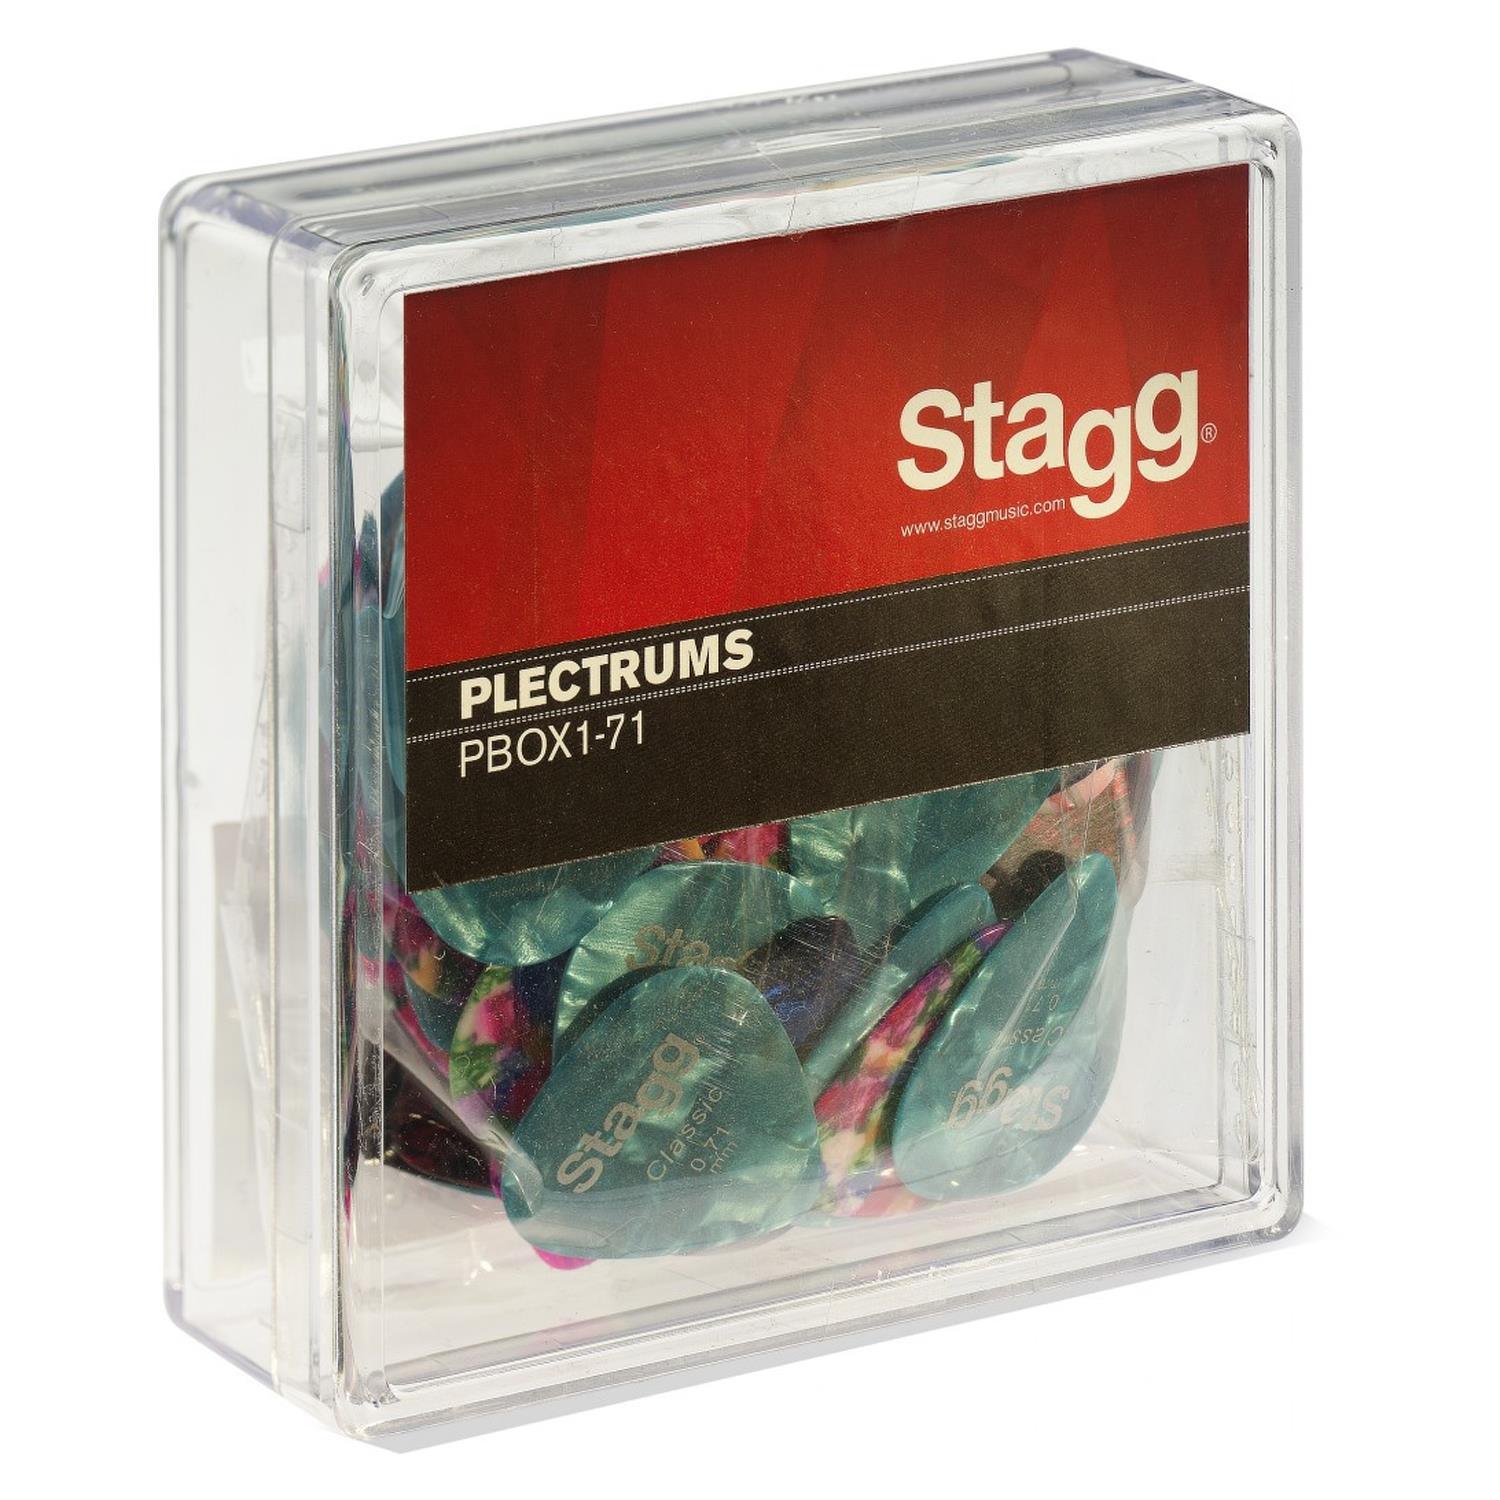 100 x Stagg Plastic Plectrums Picks 0.71mm Multicoloured - DY Pro Audio